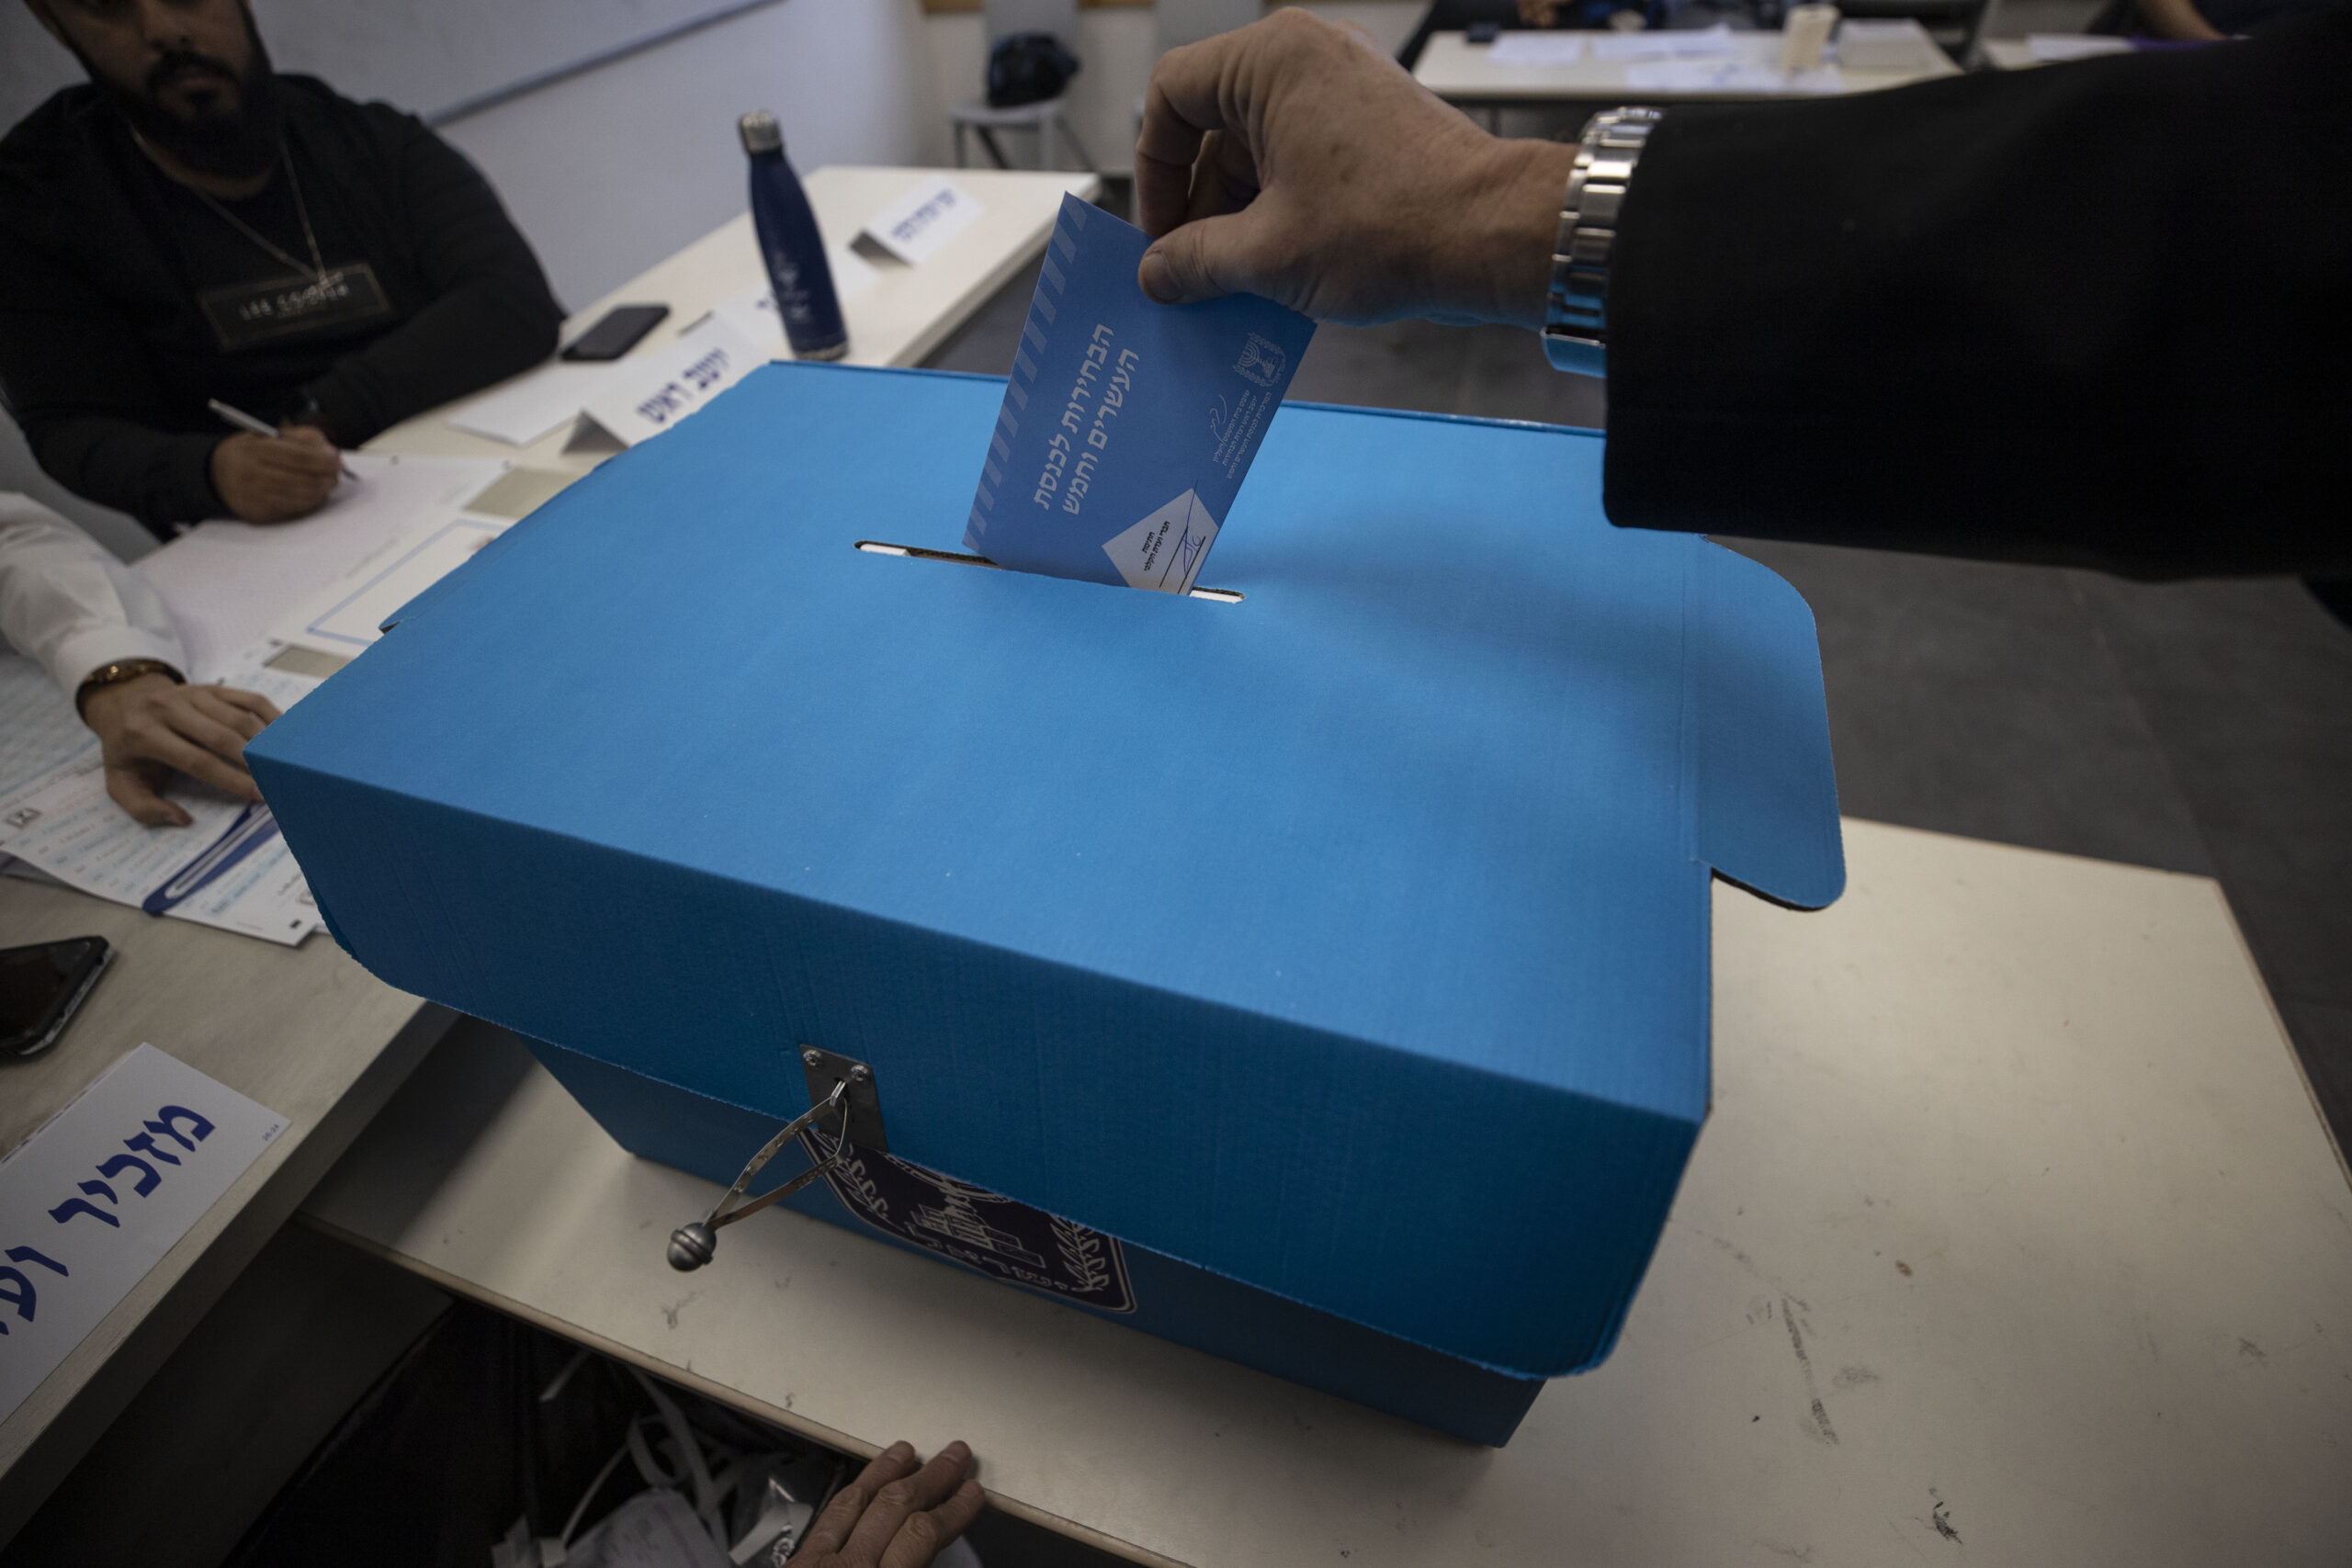 Israeli citizens cast their votes for the 2022 Israeli legislative election at a polling station in West Jerusalem, November 01, 2022 [Mostafa Alkharouf/Anadolu Agency]